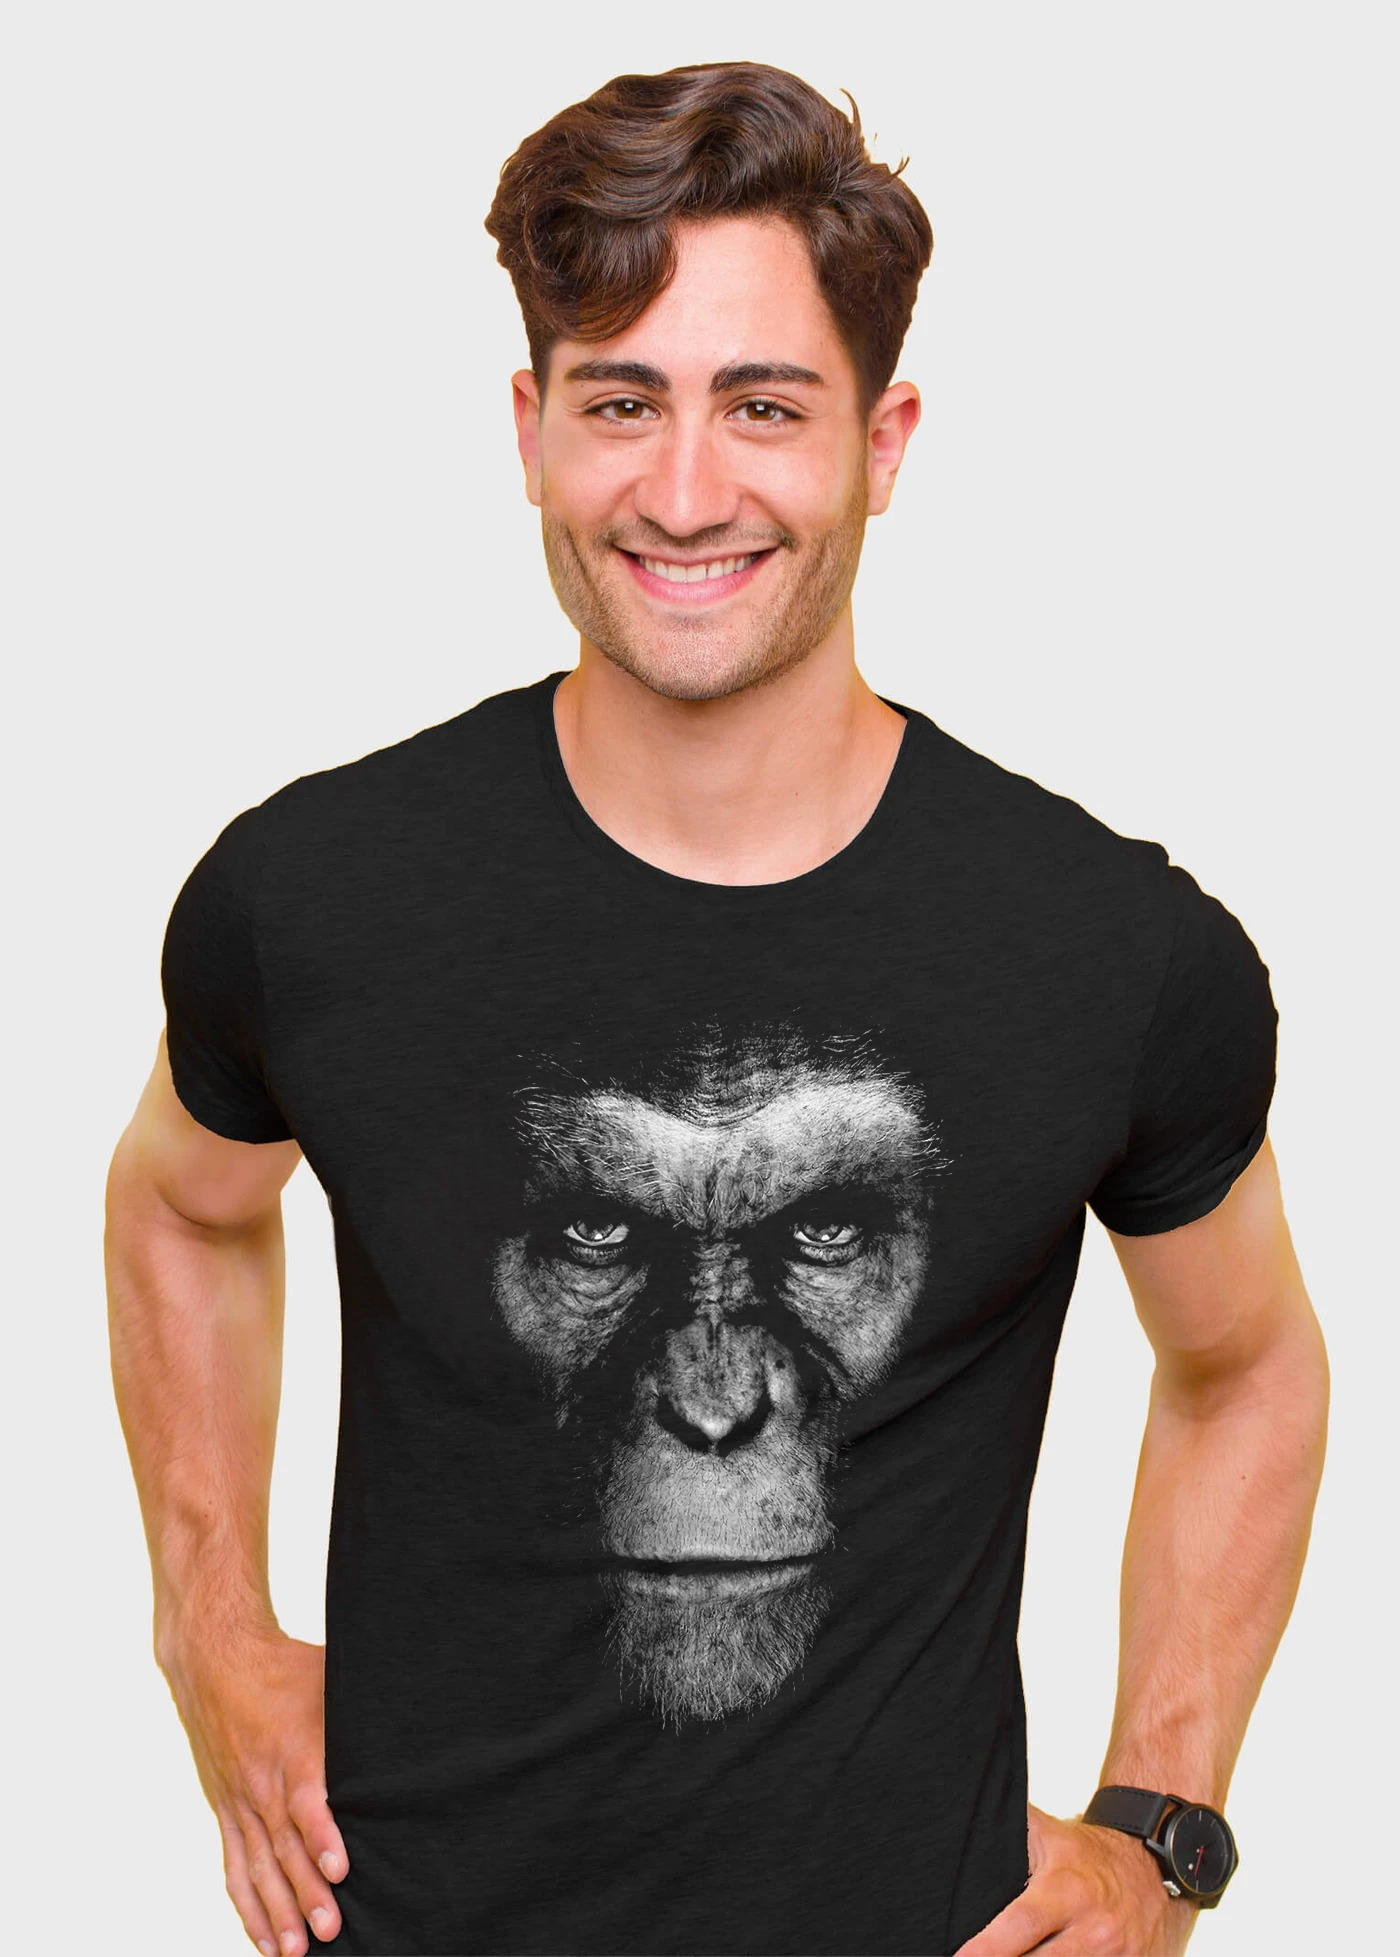 Planet of Apes T-shirt for Men by Kapdewala - Kapdewala